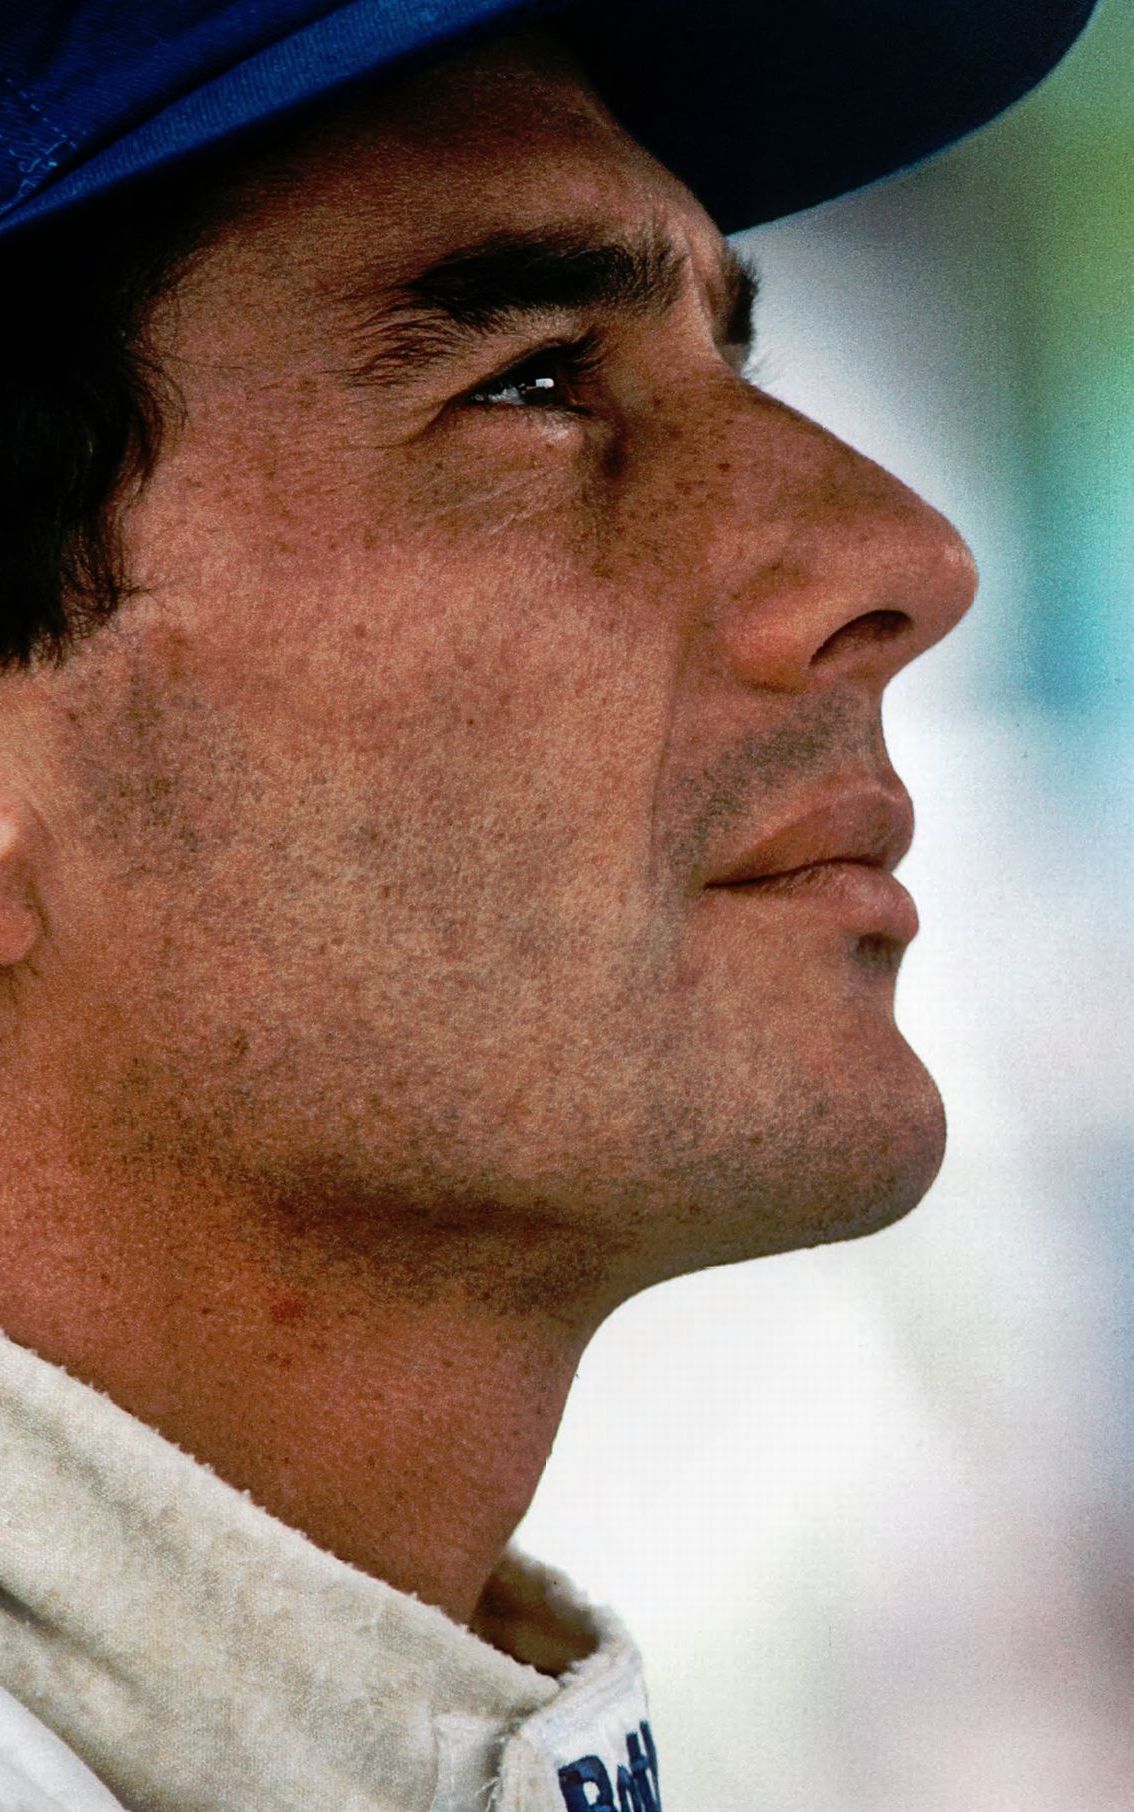 Happy Birthday !

Ayrton Senna, La Légende - livre de photos par Paul Henri Cahier 